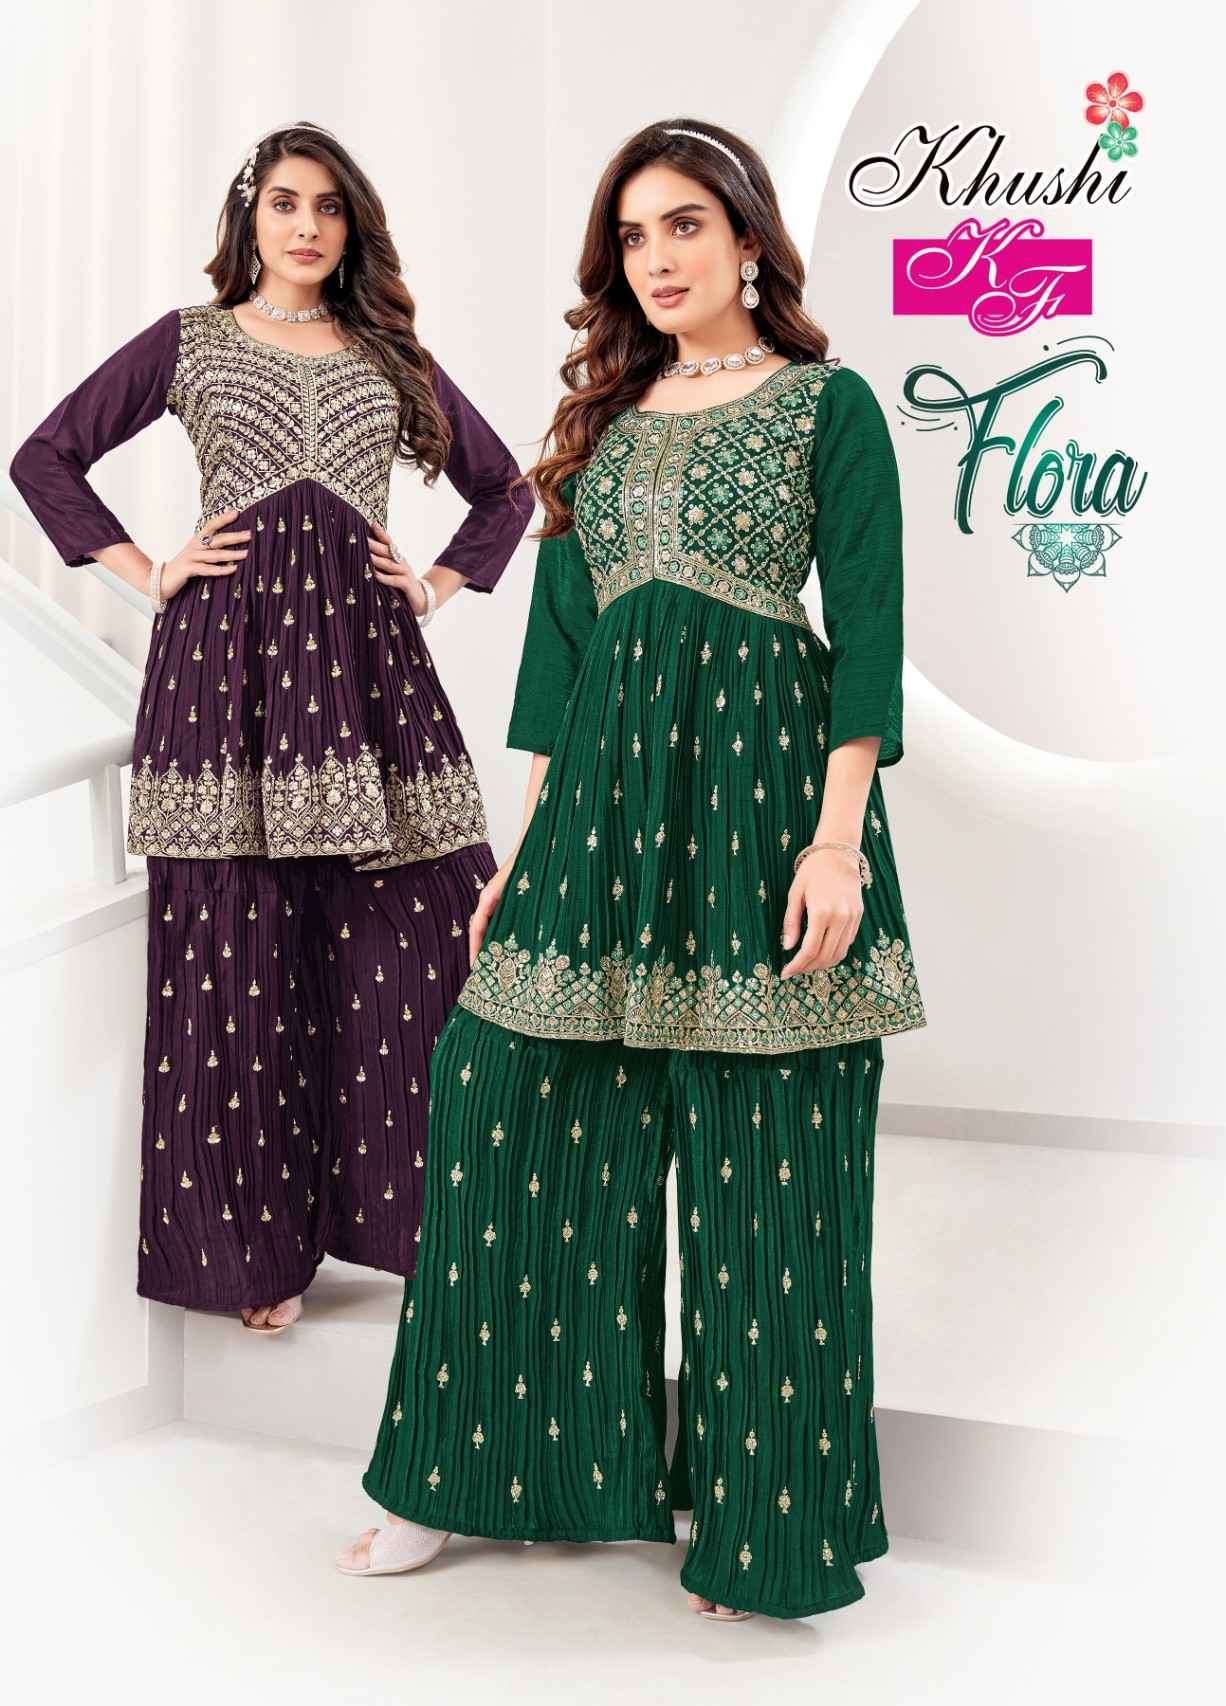 Khushi Fashion Flora Designer Top Sharara Pair Festive Collection